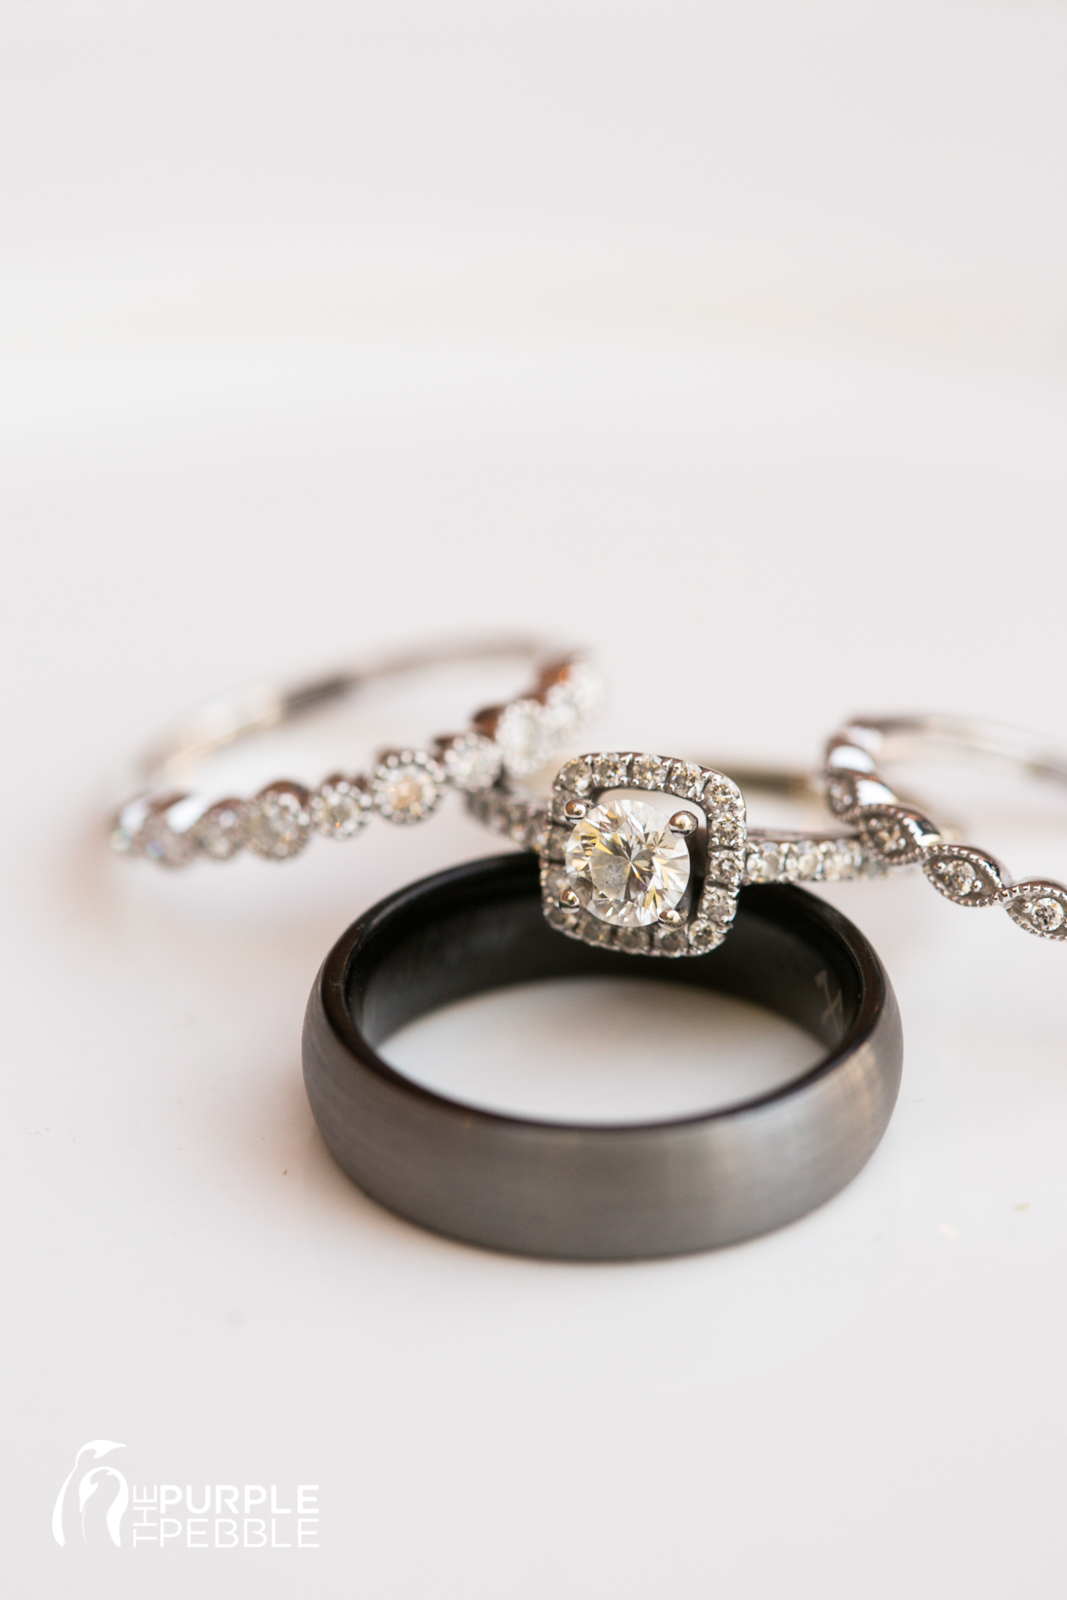 Wedding Engagement Rings